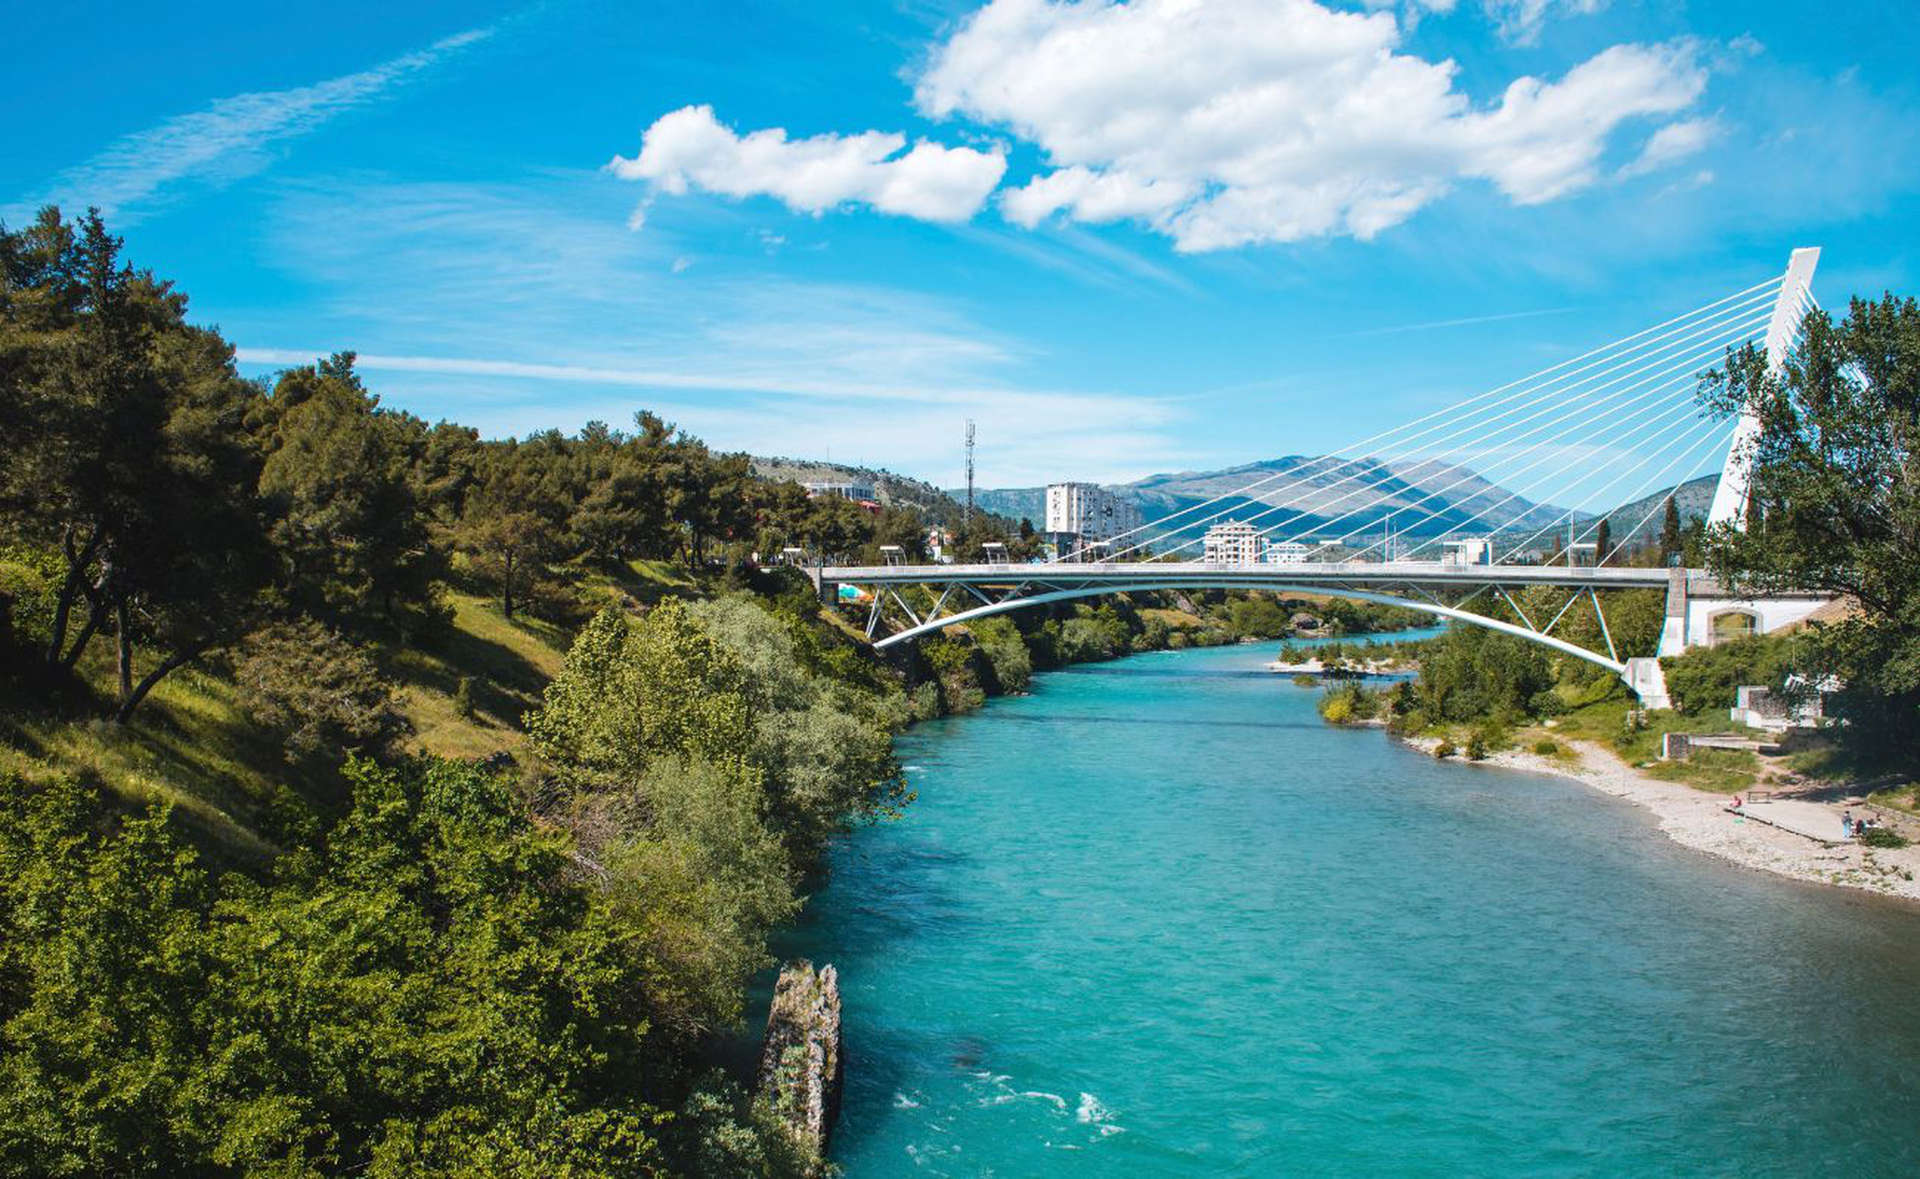 Millennium-Brücke (Podgorica)